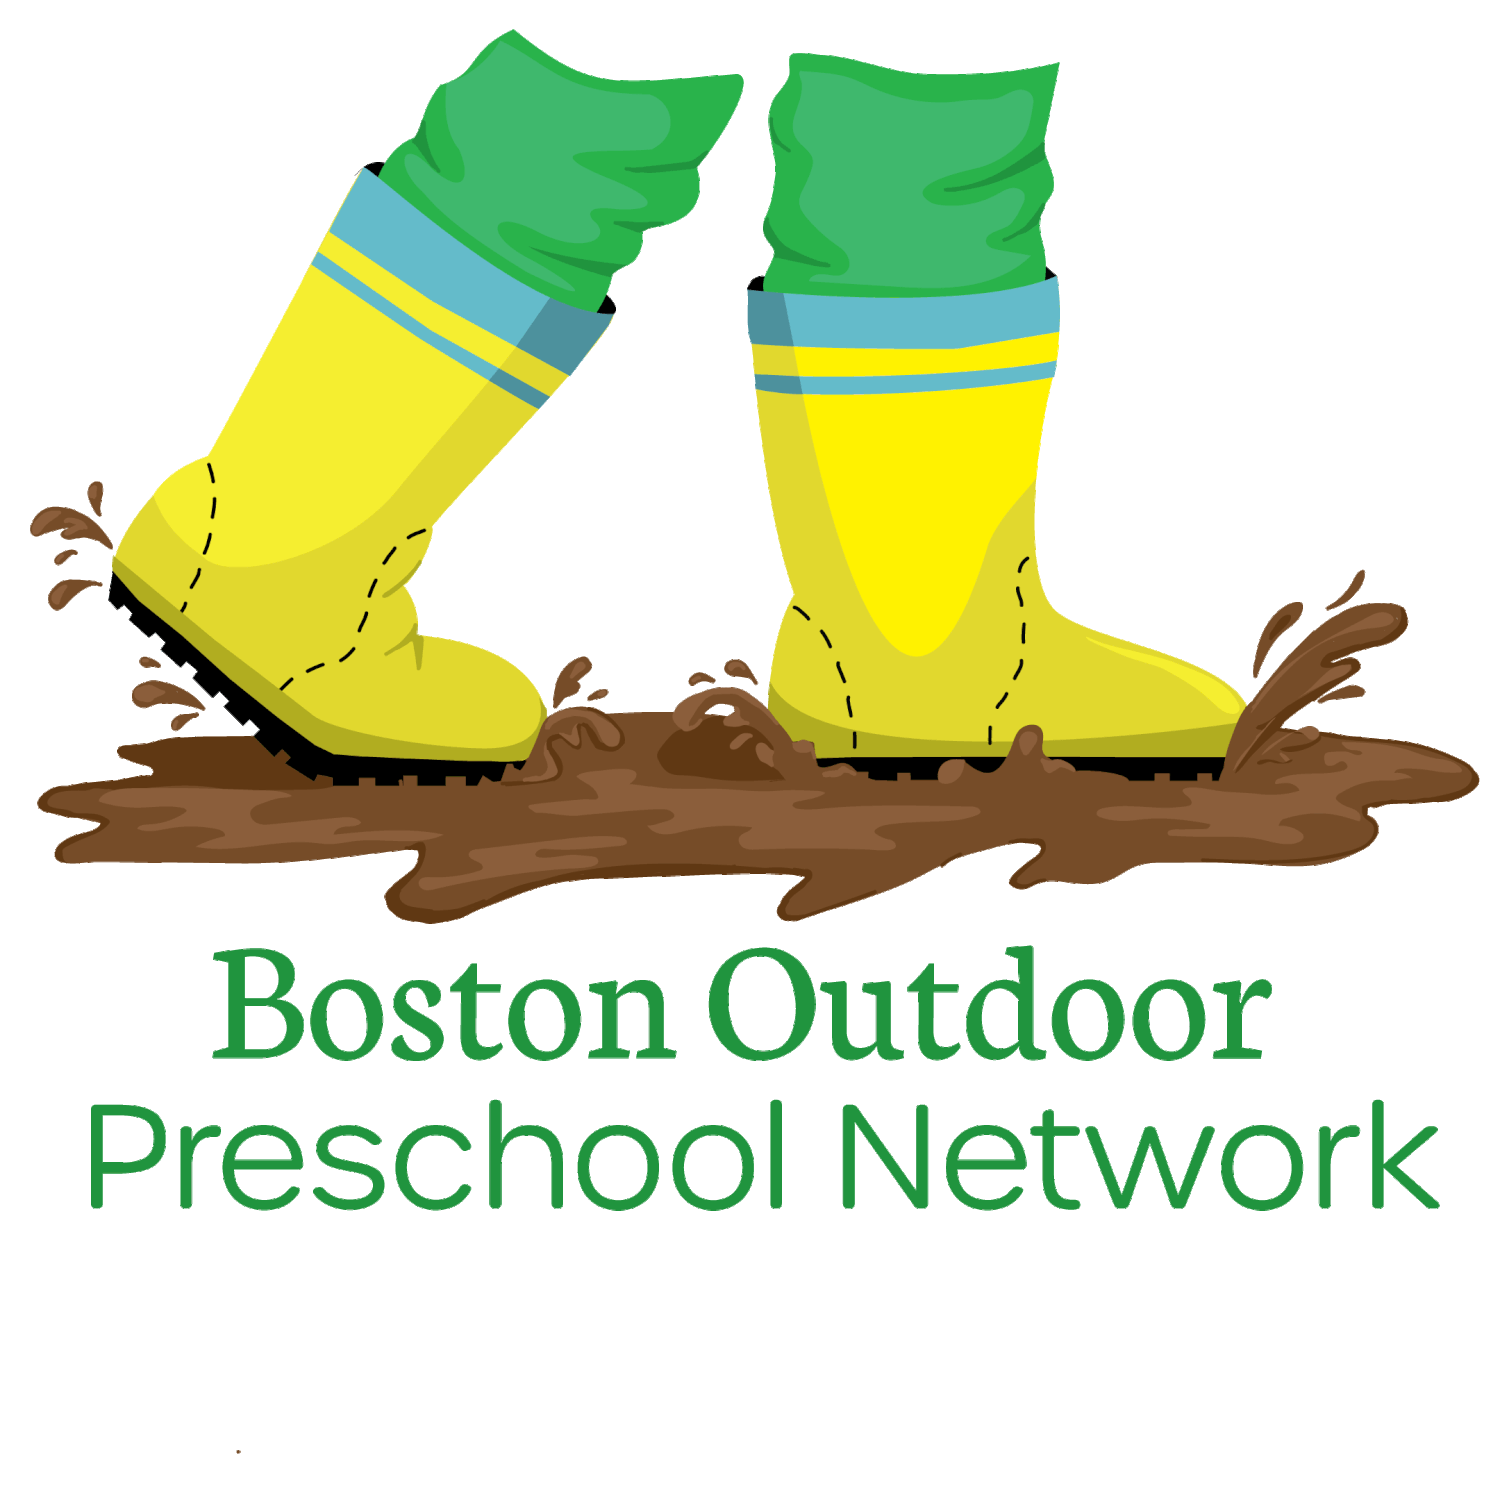 Boston Outdoor Preschool Network